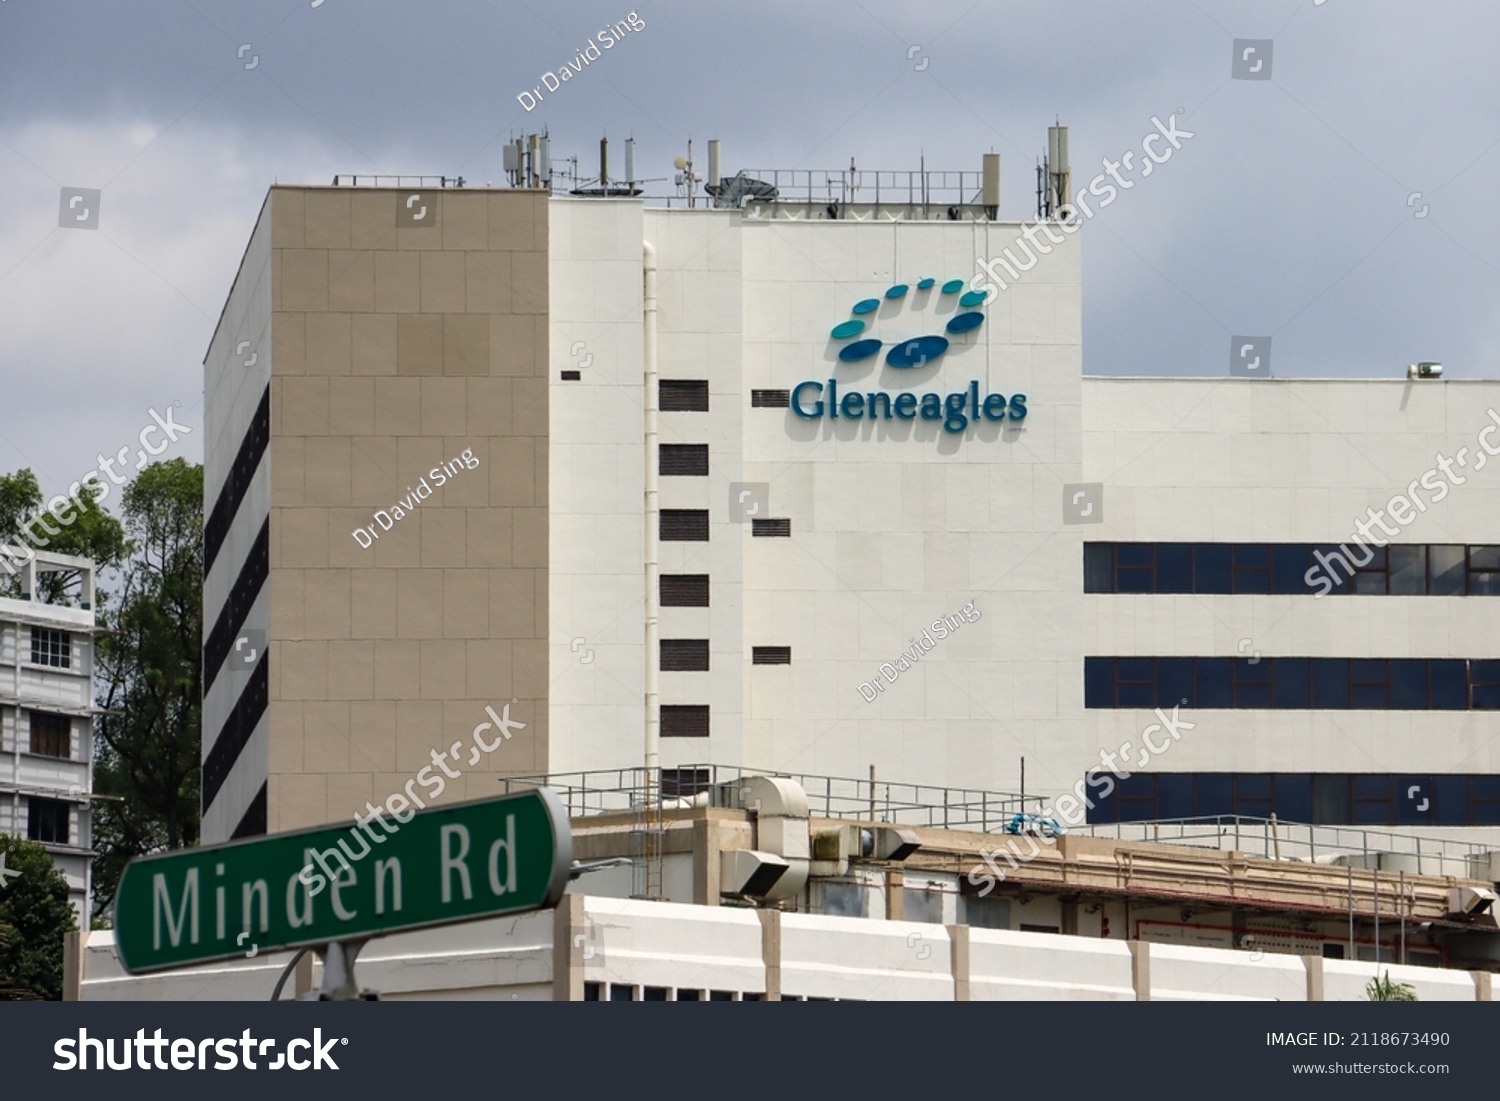 Gleneagles hospital